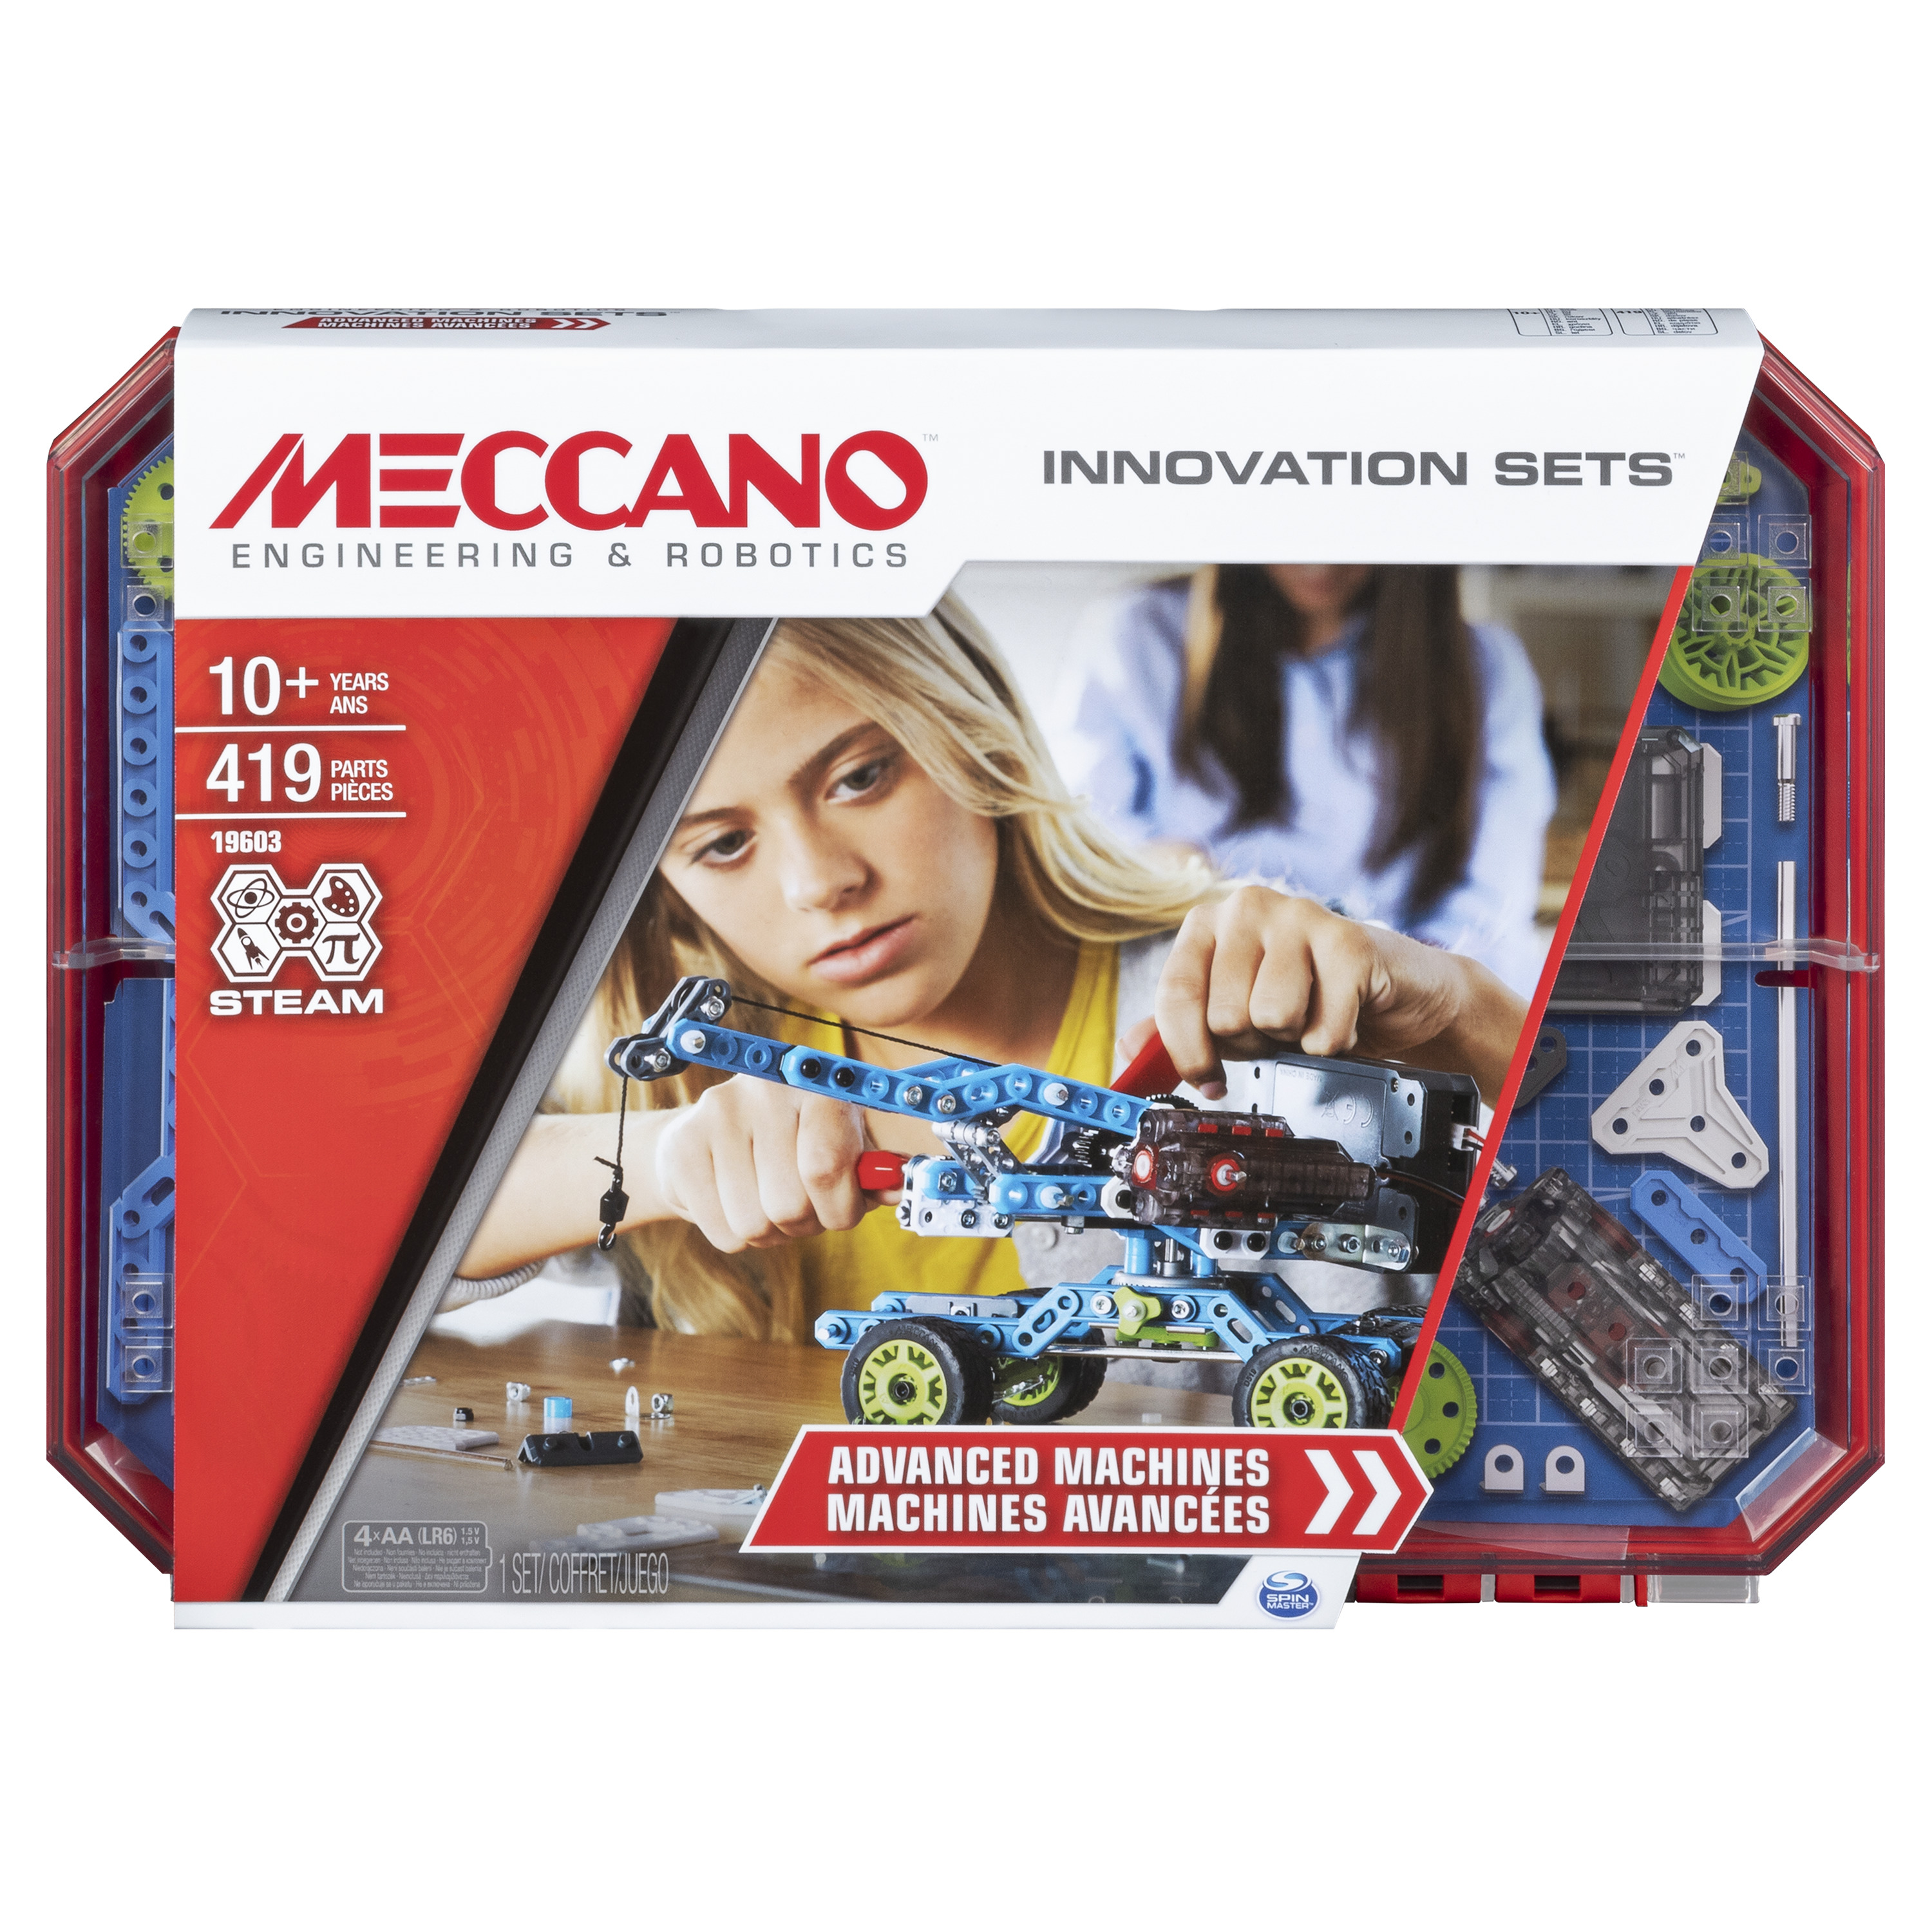 meccano engineering and robotics